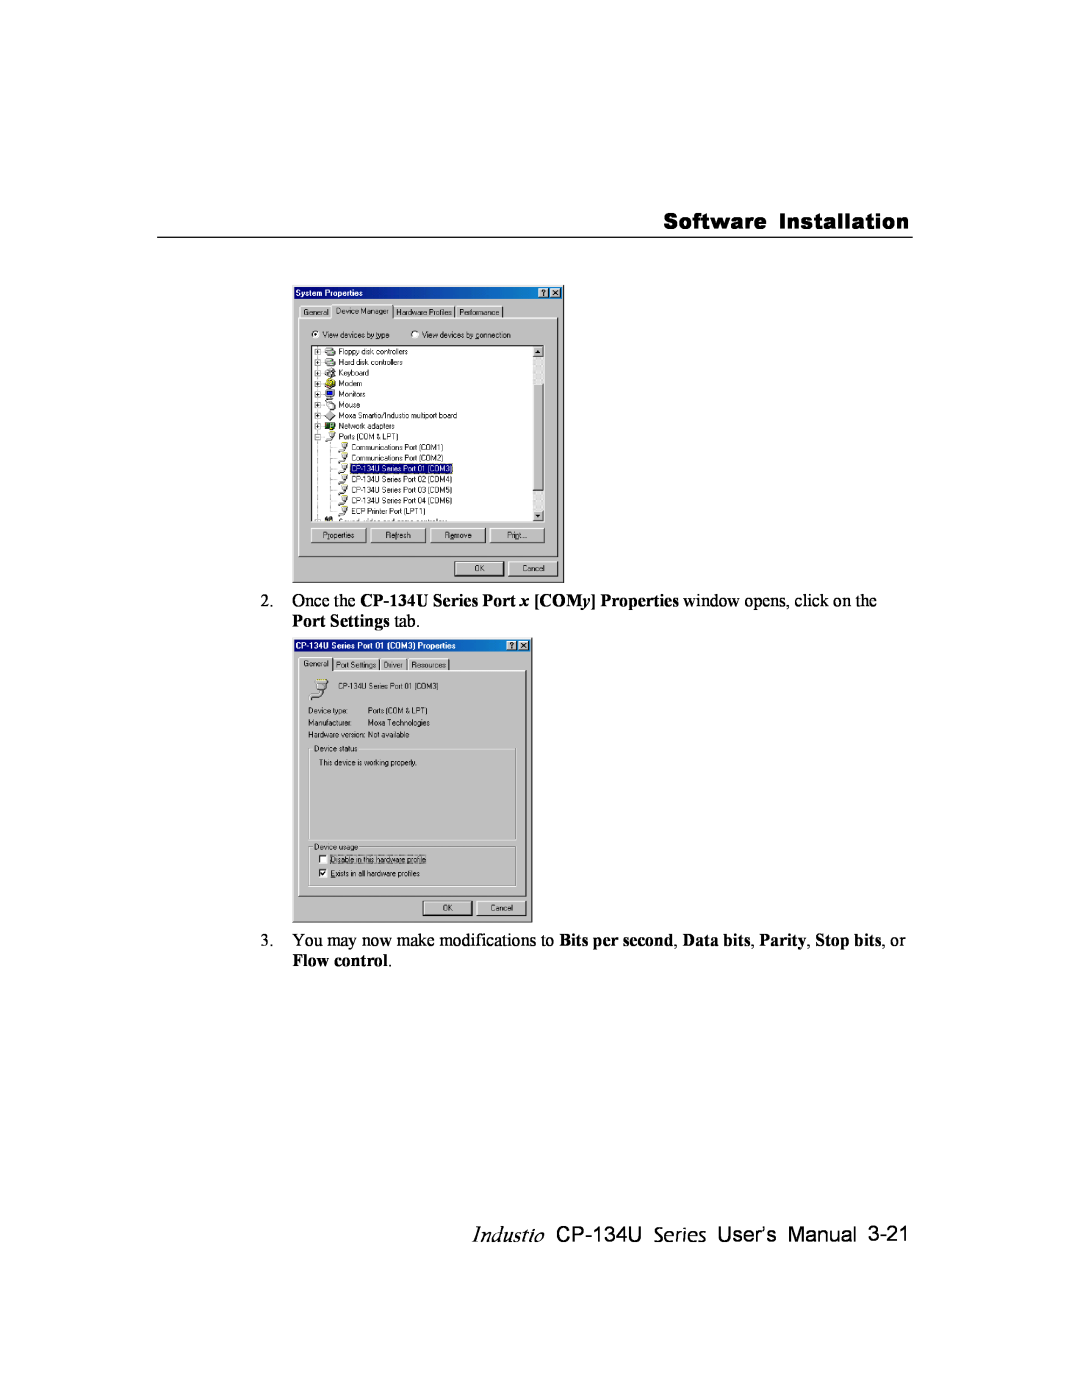 Moxa Technologies user manual Software Installation, Industio CP-134U Series User’s Manual 